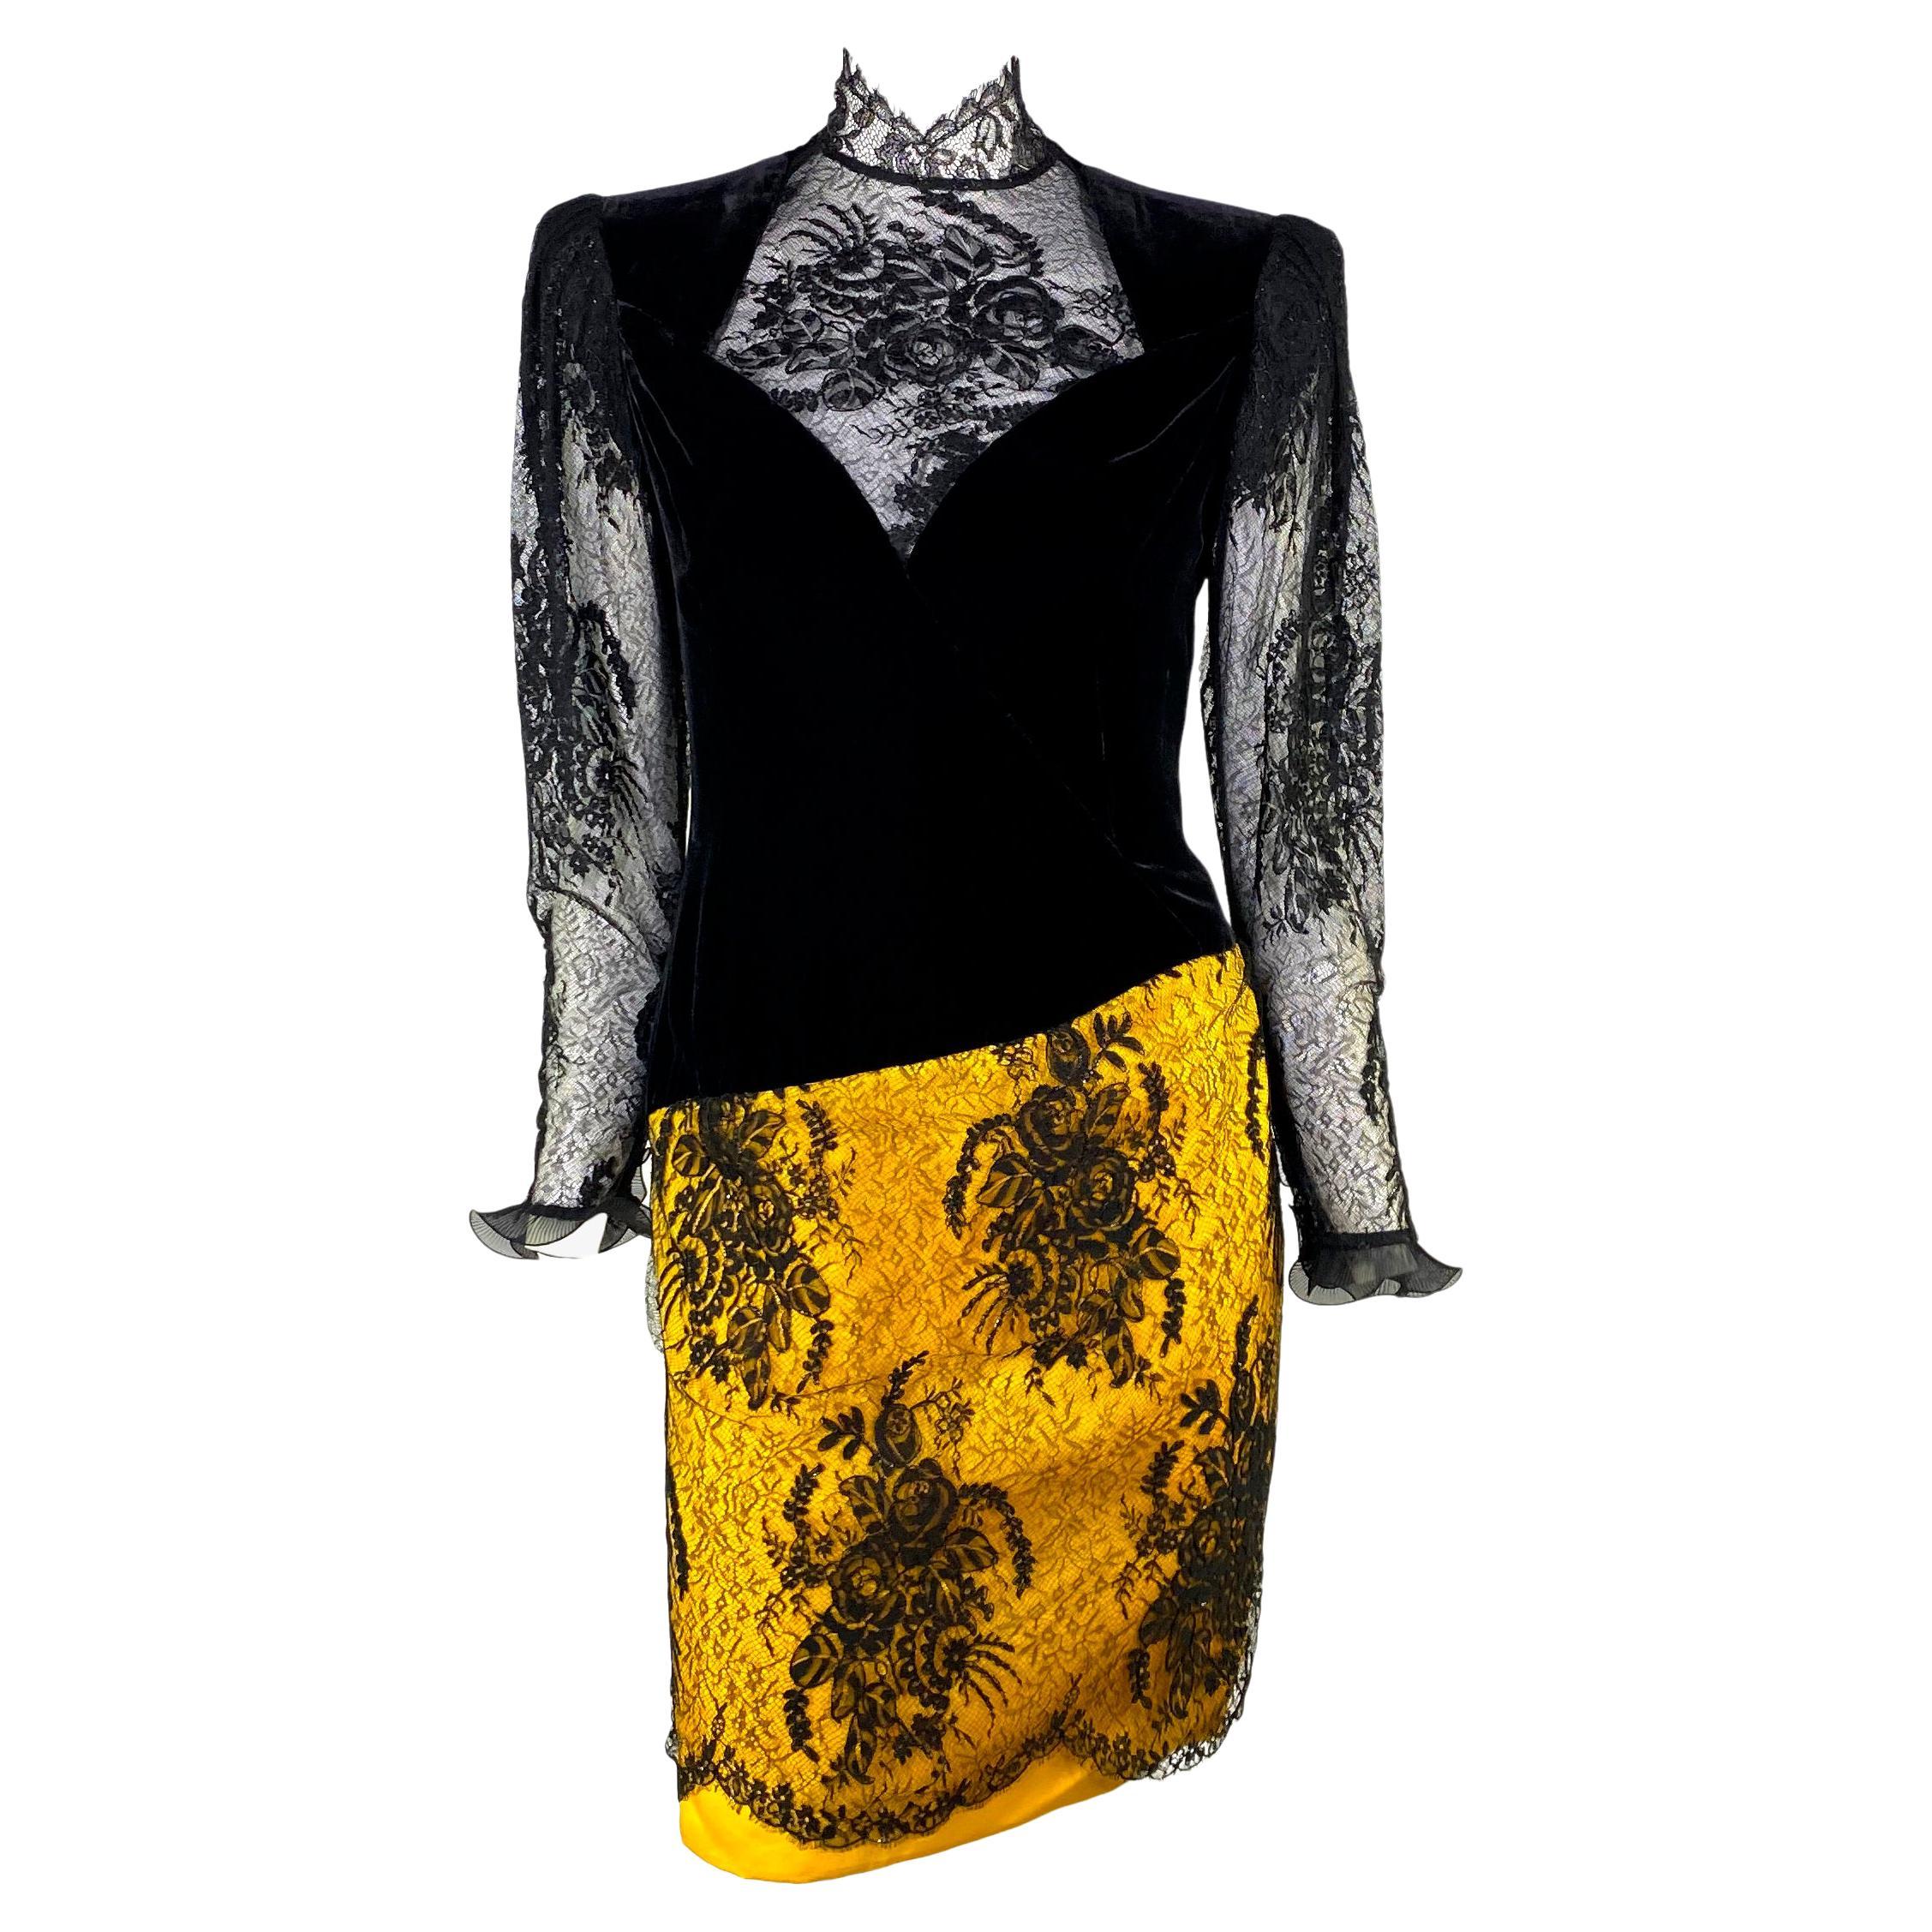 velvey puff sleeve dress with engineered skirt